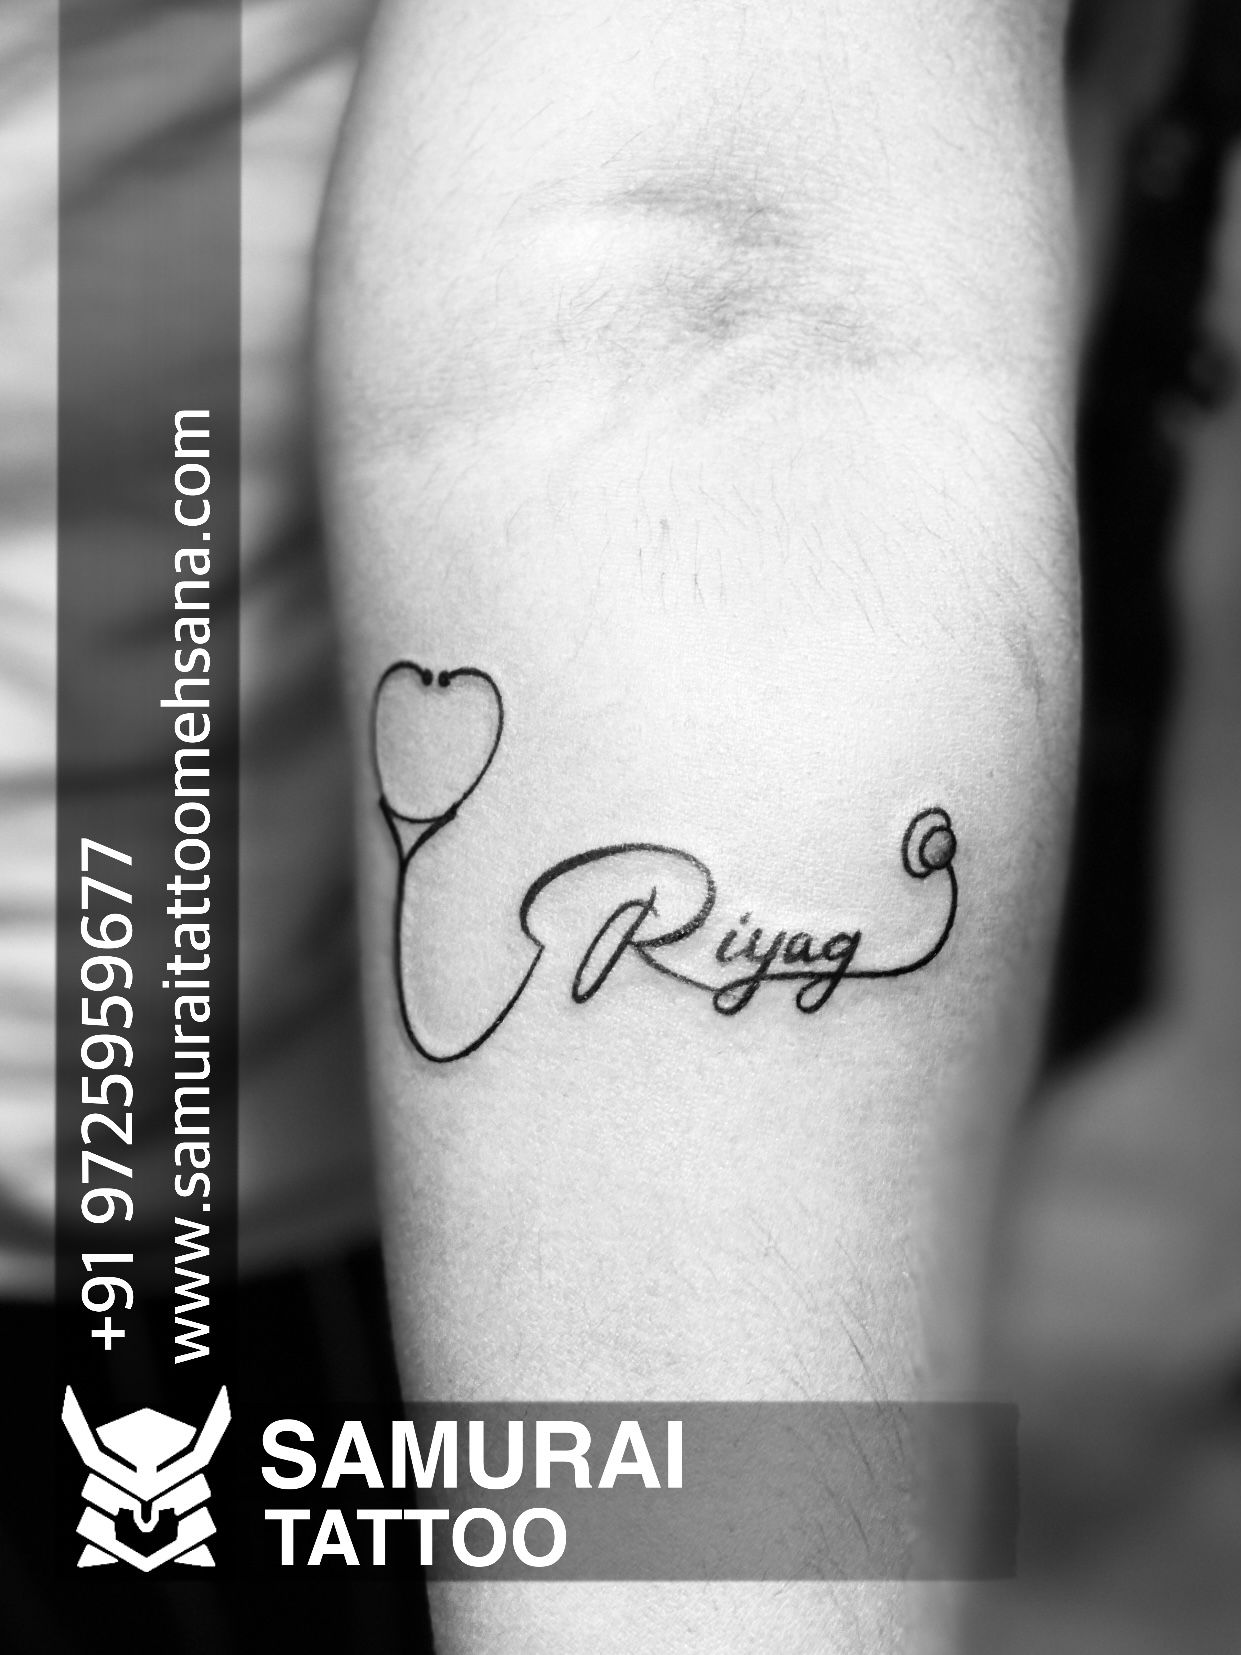 Tattoo uploaded by Vipul Chaudhary • Riyag name tattoo |Riyag name tattoo  ideas |Riyag tattoo • Tattoodo